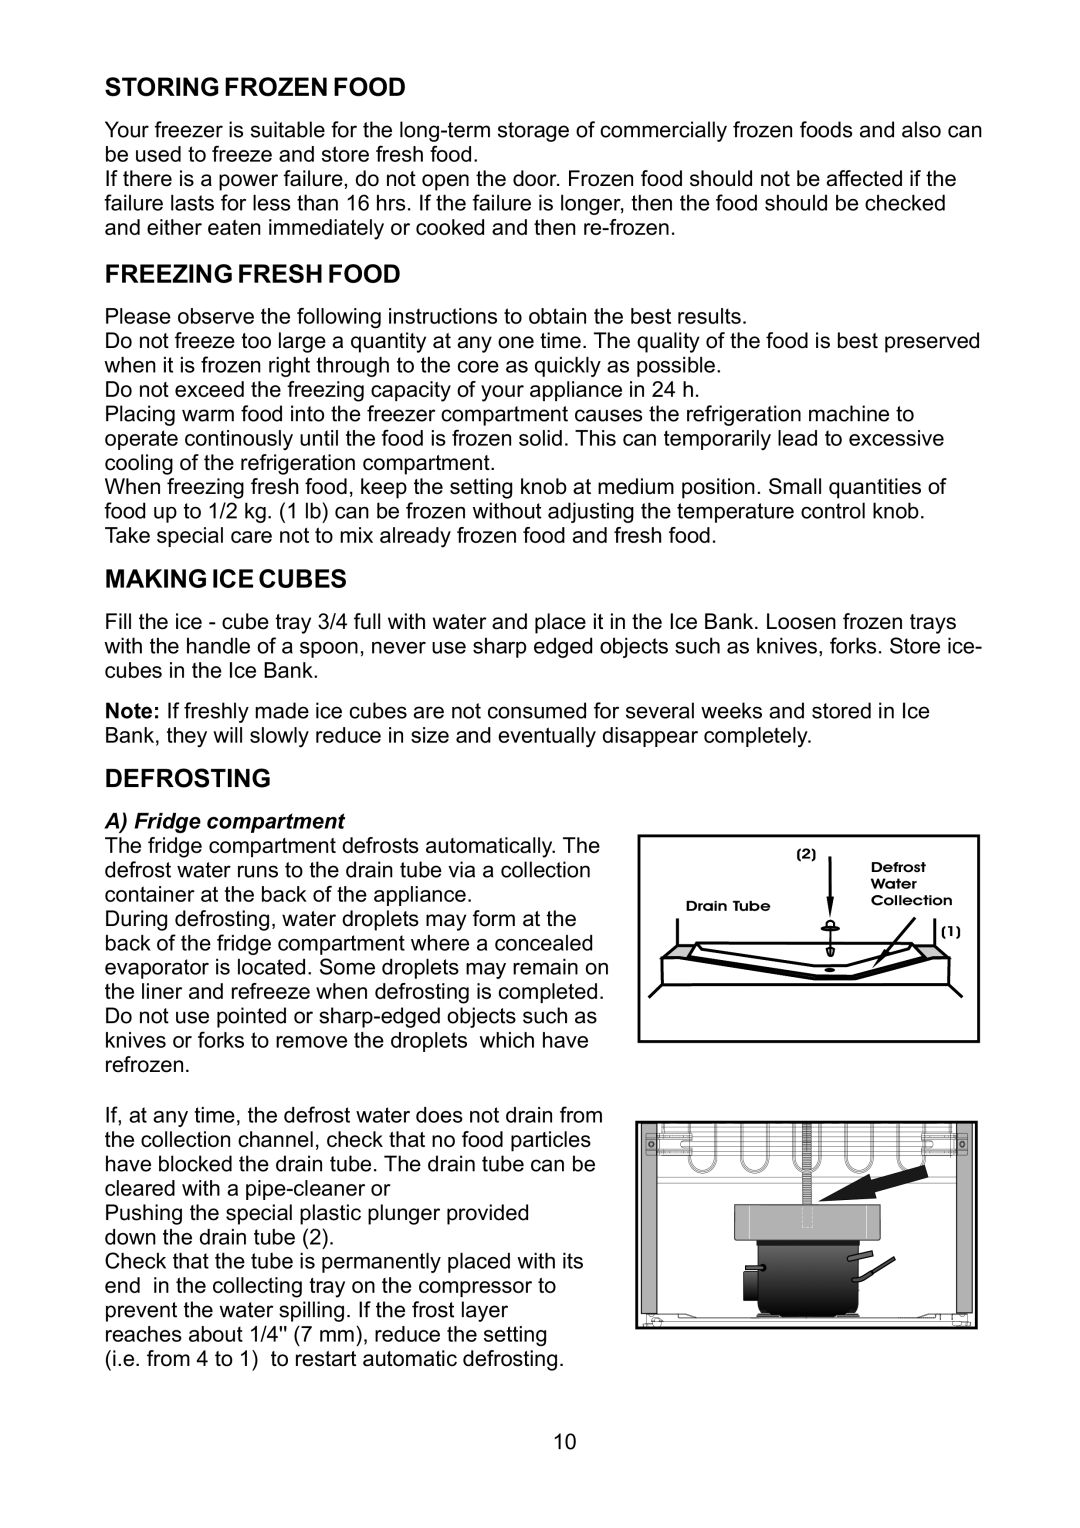 Beko CF5713AP manual Storing Frozen Food, Freezing Fresh Food, Making Ice Cubes, Defrosting, AFridgecompartment 